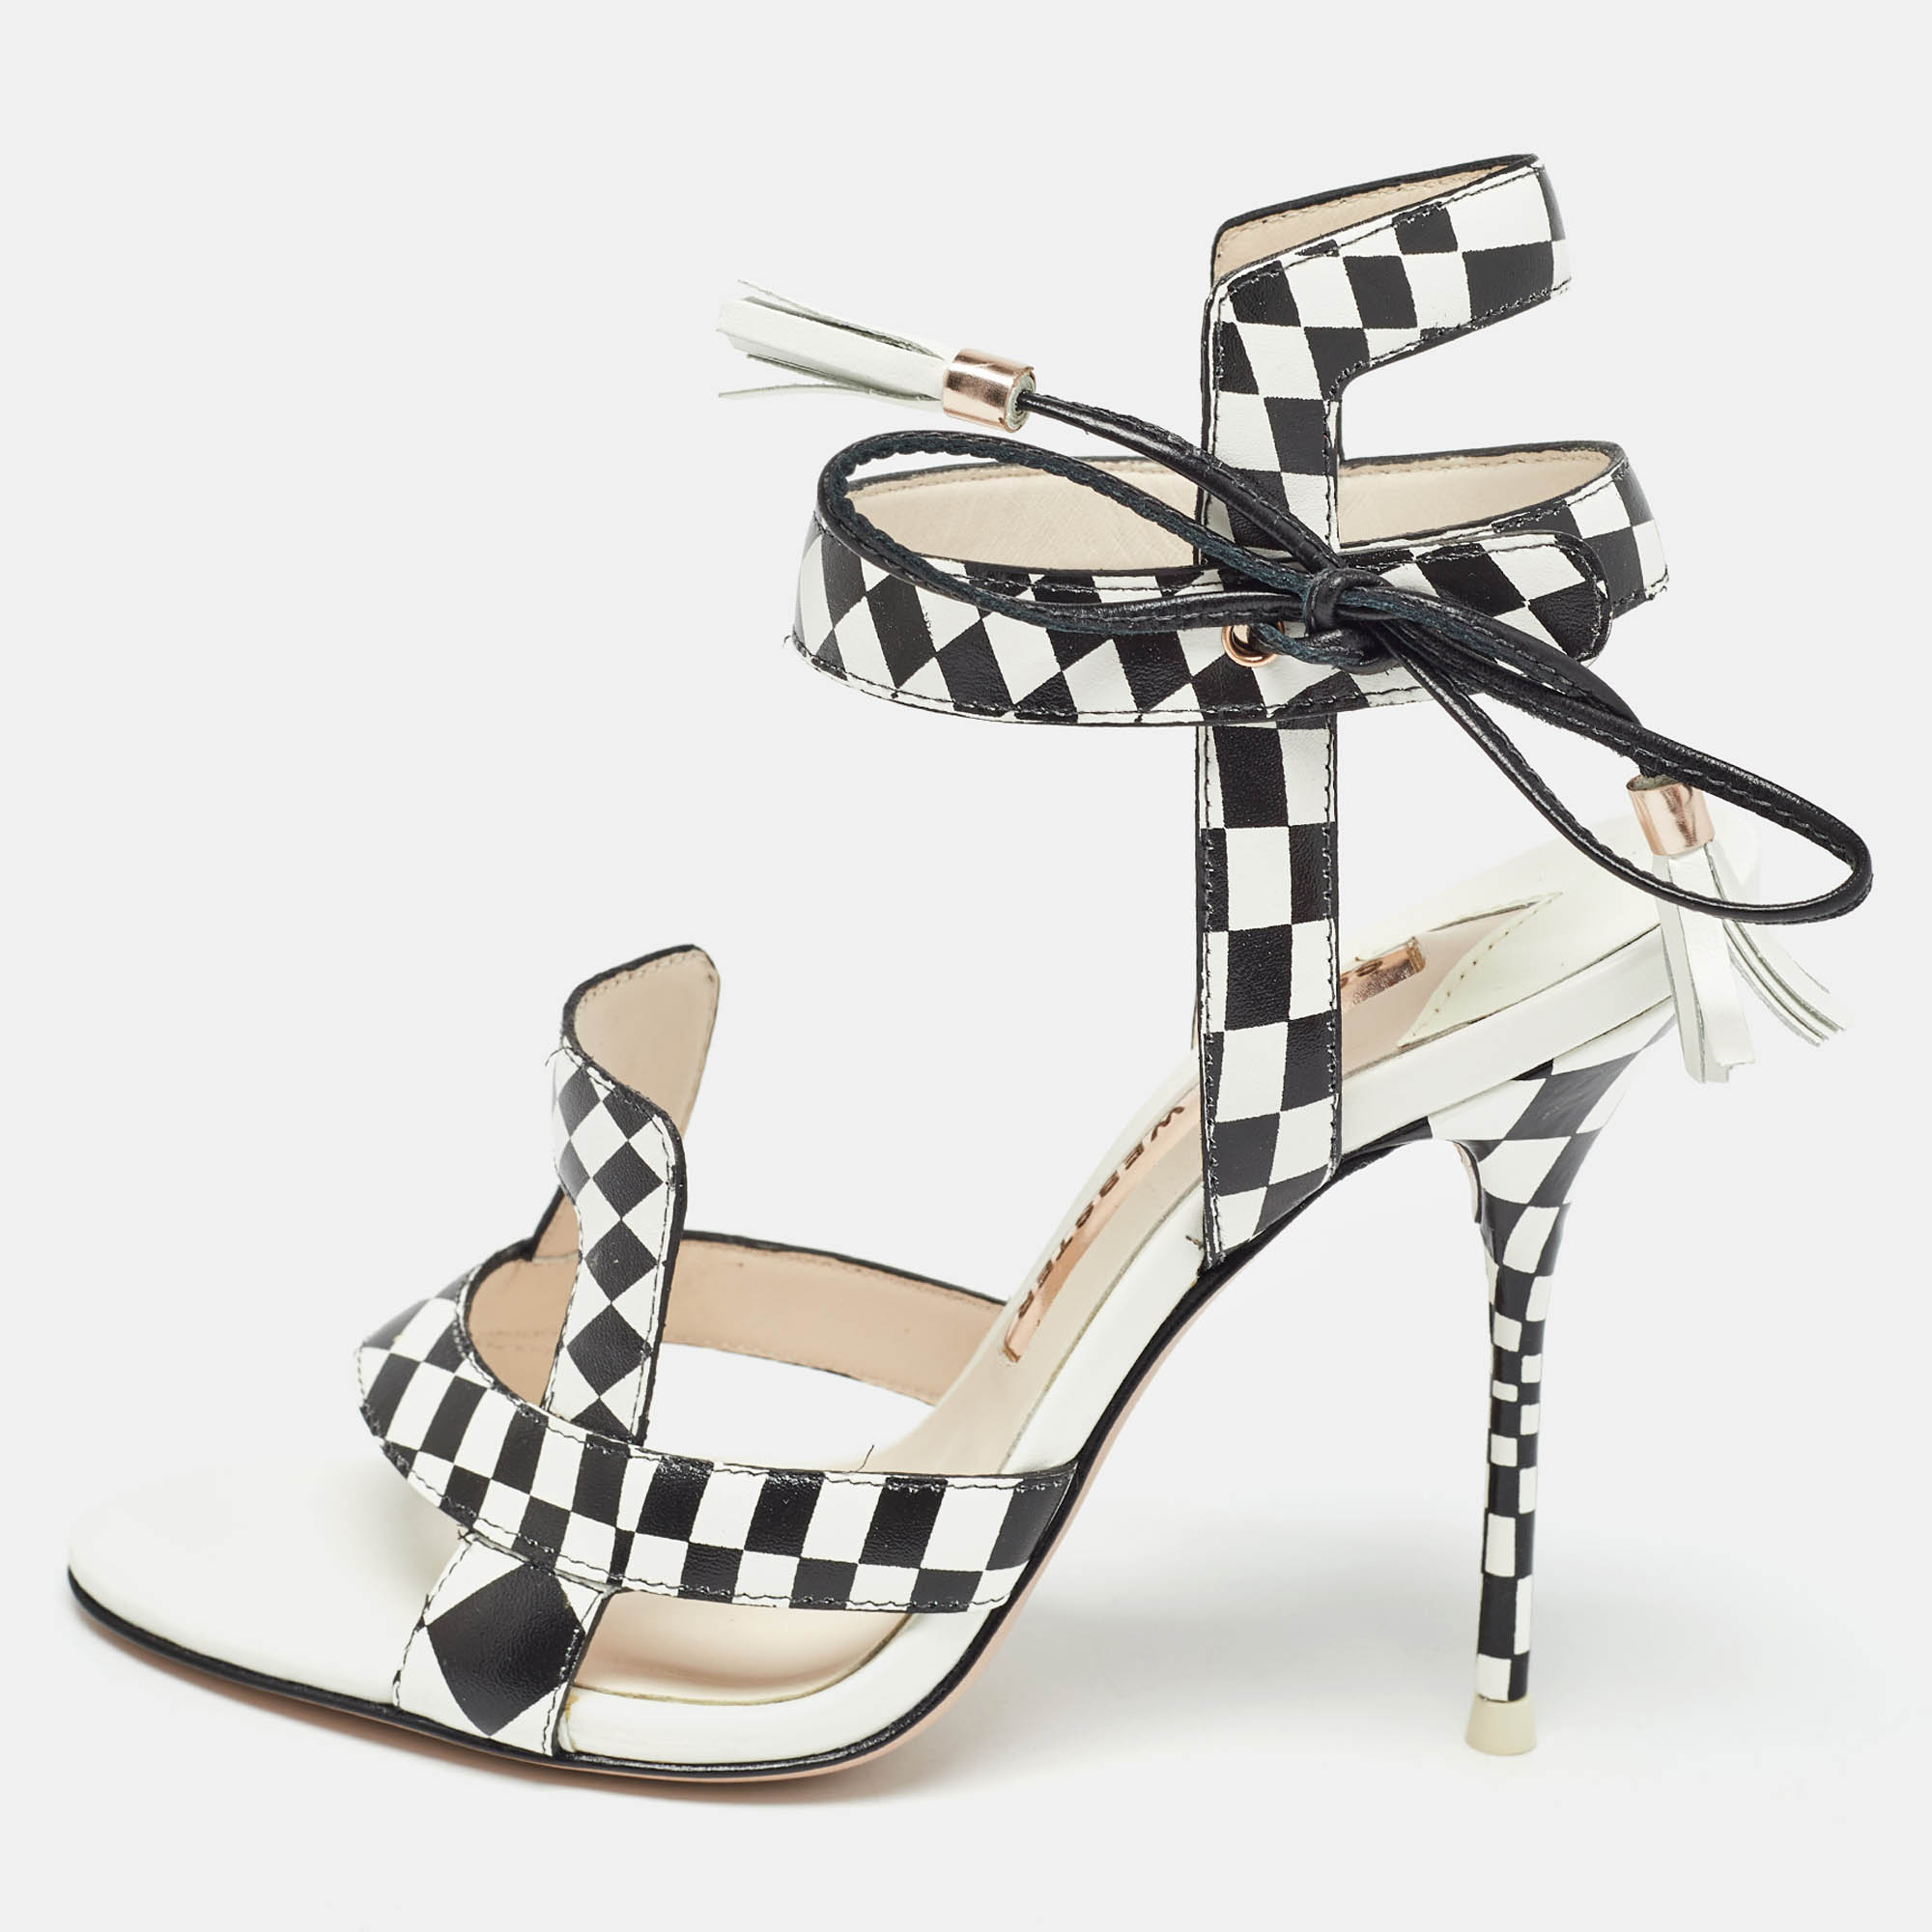 Sophia webster white/black checkered leather poppy sandals size 35.5